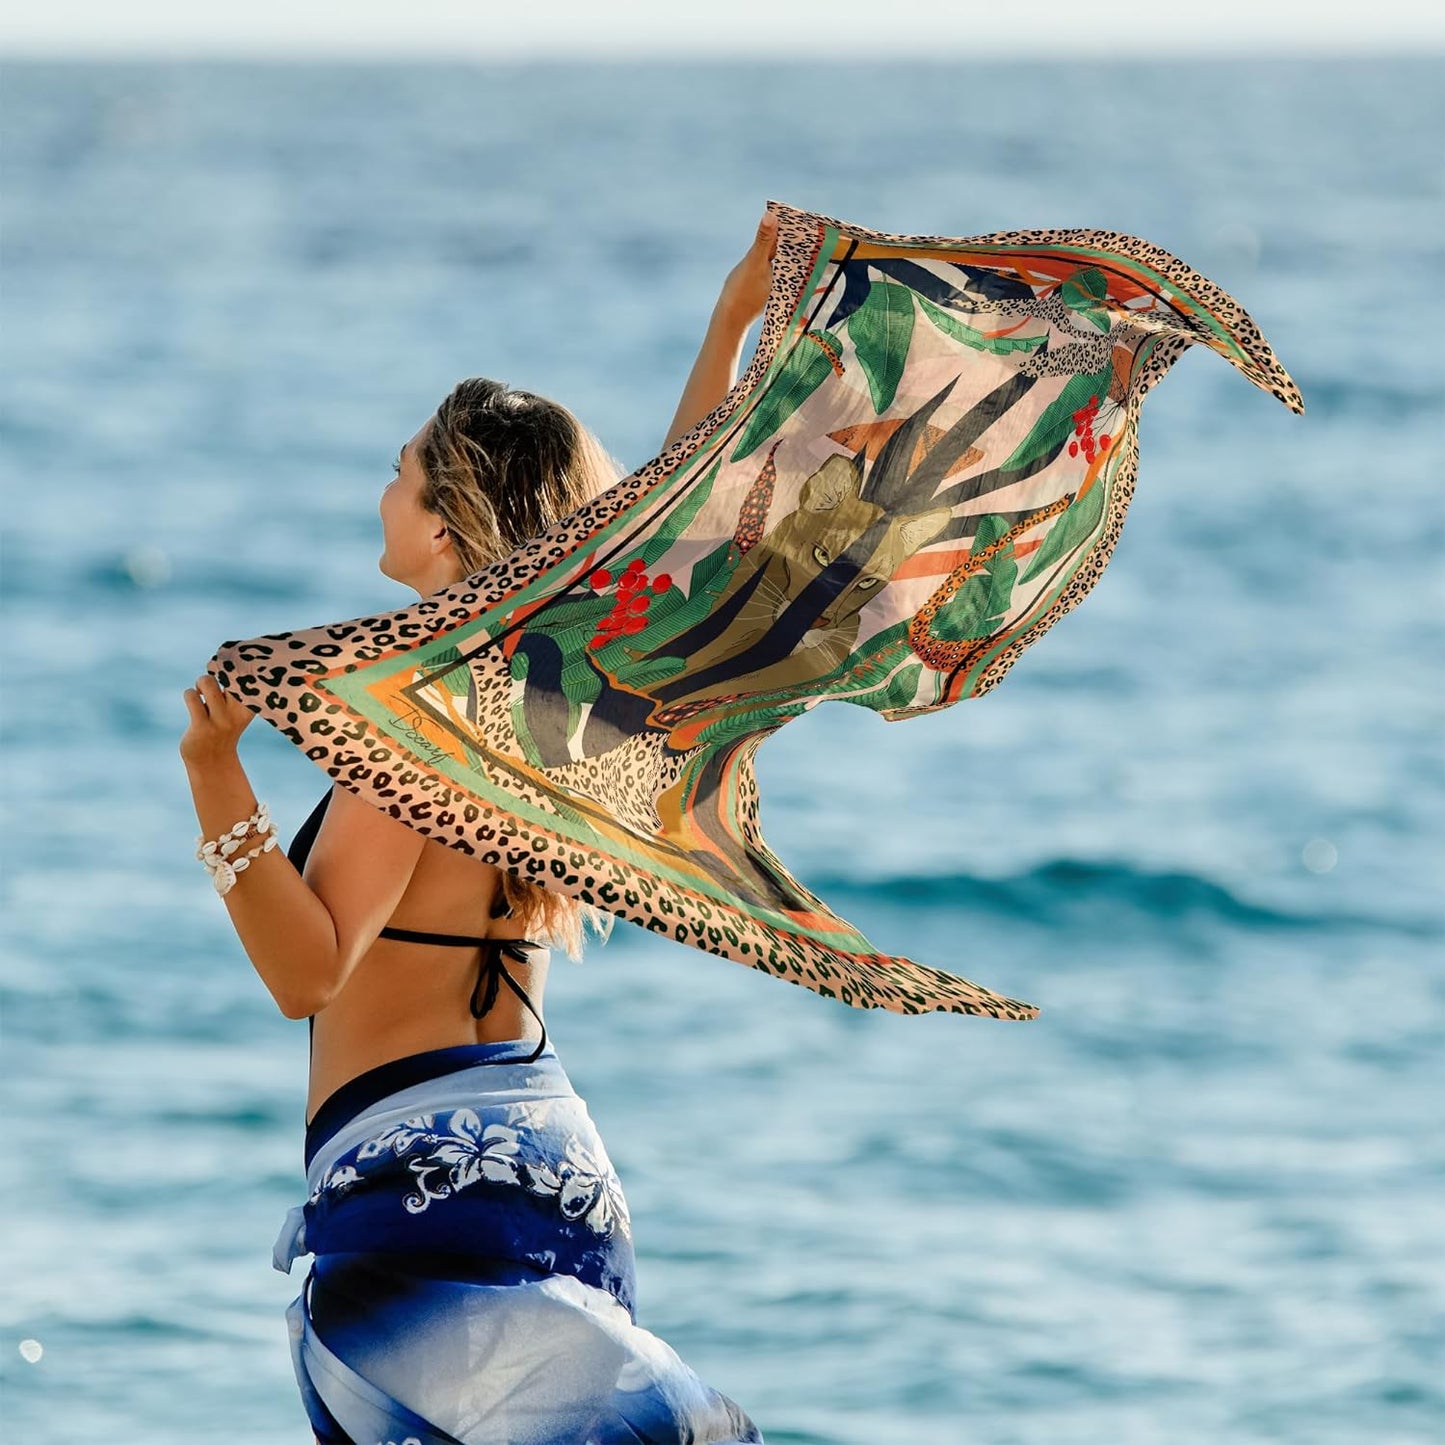 dscarf Women Sarong Swimsuit Printed Cover up Chiffon Long Bikini Wraps | Pareo Swimwear Beach Bathing Suit Cover Up Animals Design 1